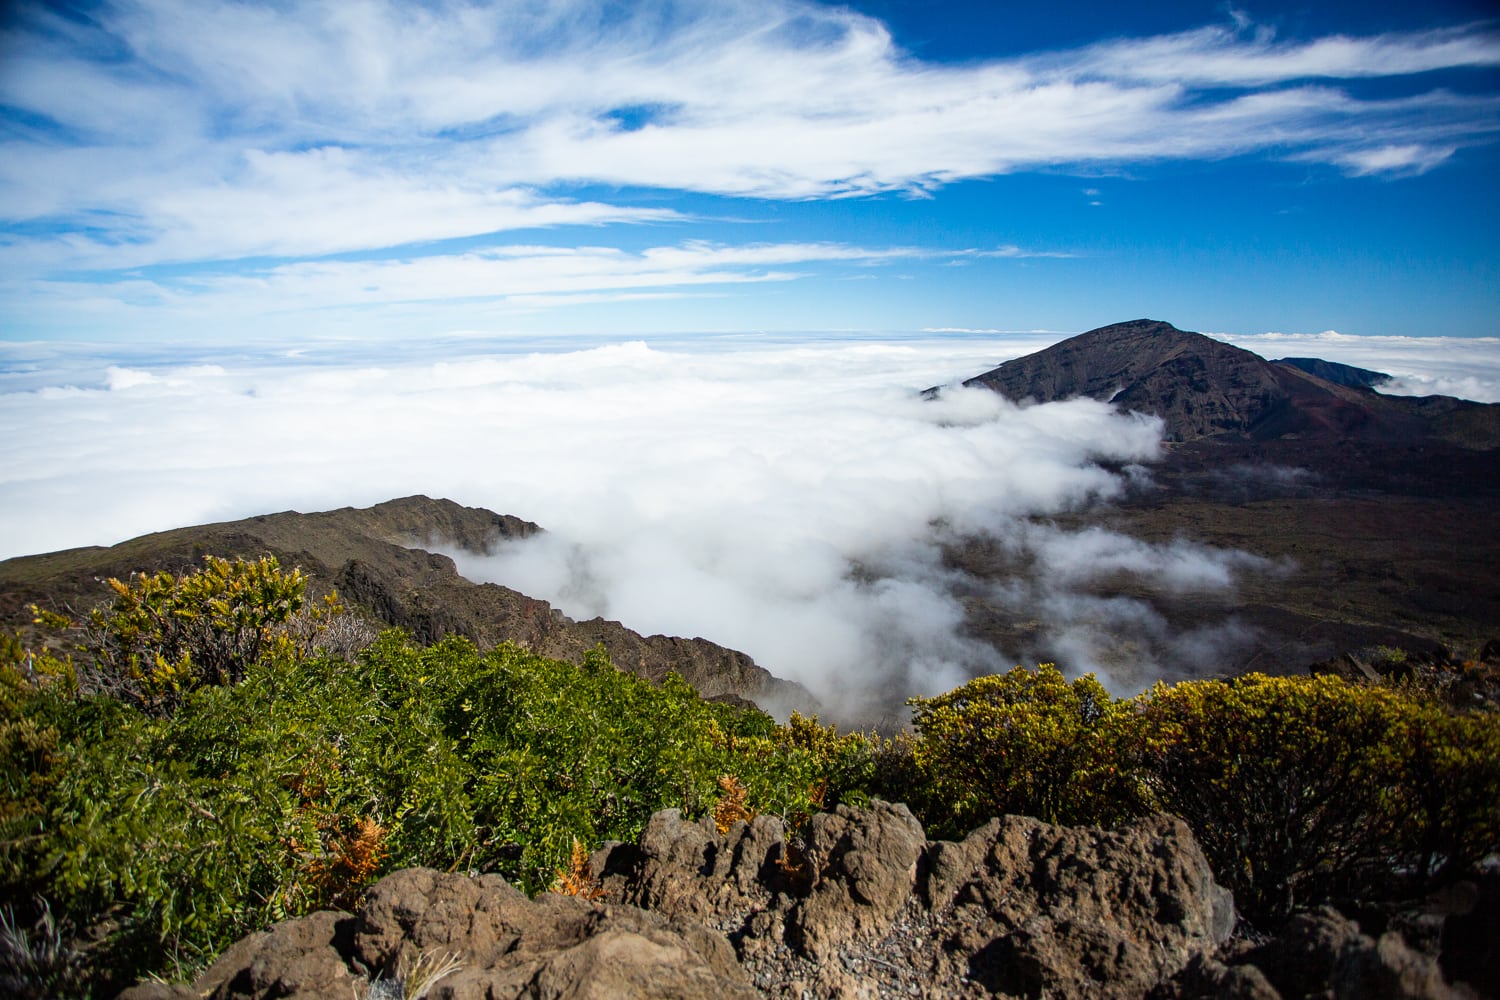 The leleiwei overlook elopement location in Haleakala's Summit district.